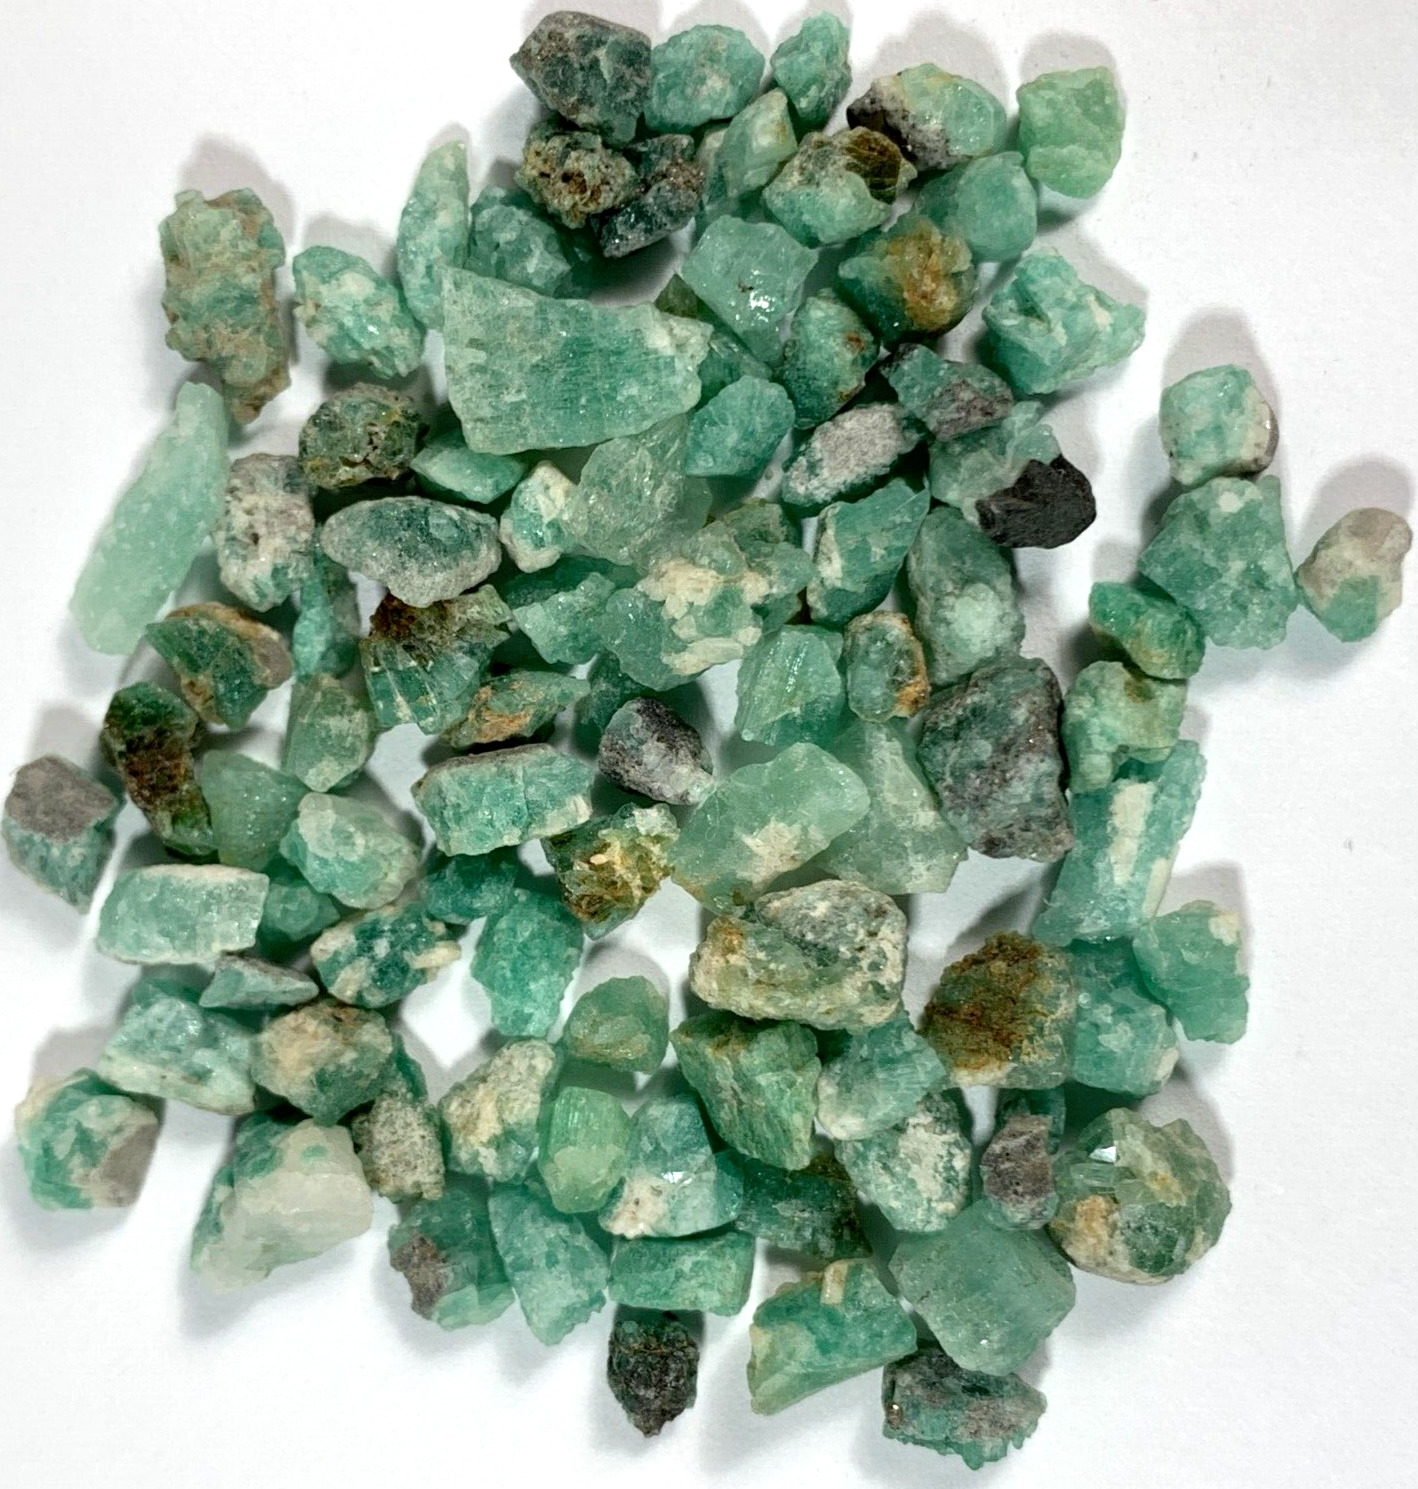 Natural rough EMERALD / BERYL crystals rock specimens raw untreated 12 grams